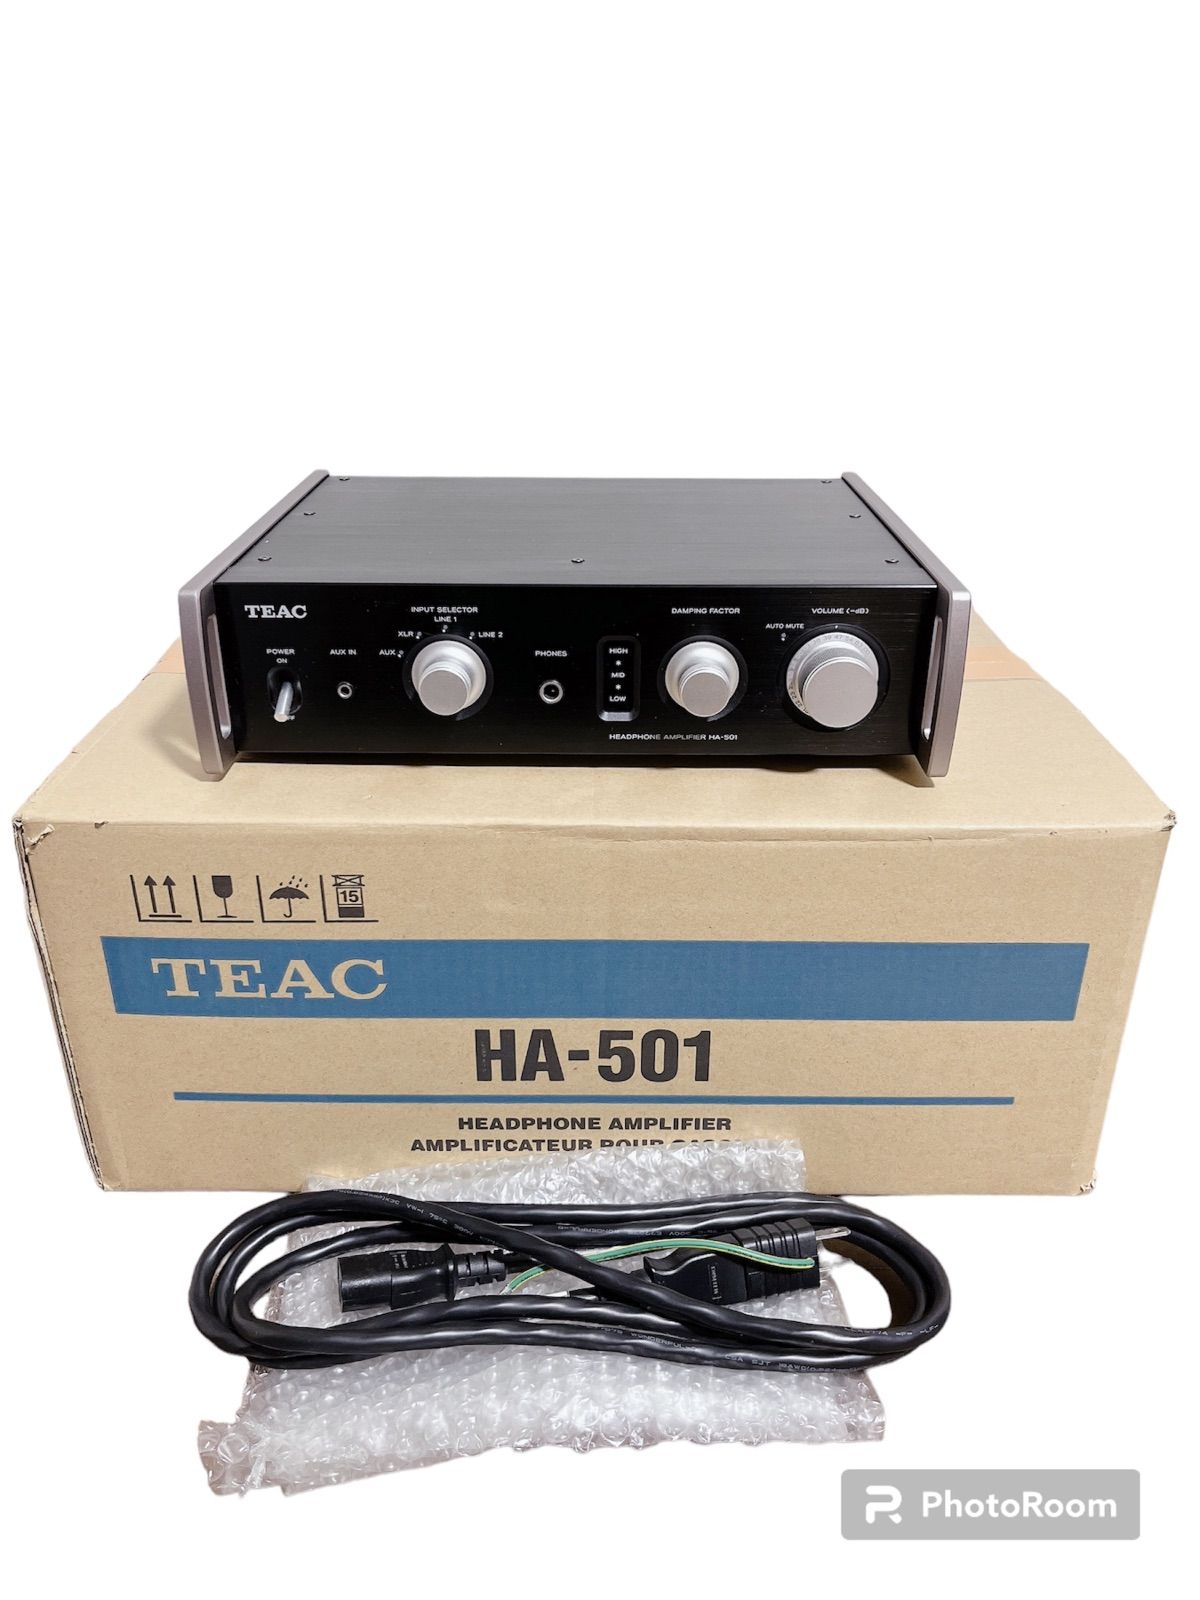 TEAC Reference 501 ヘッドホンアンプ HA-501-S - オーディオ機器